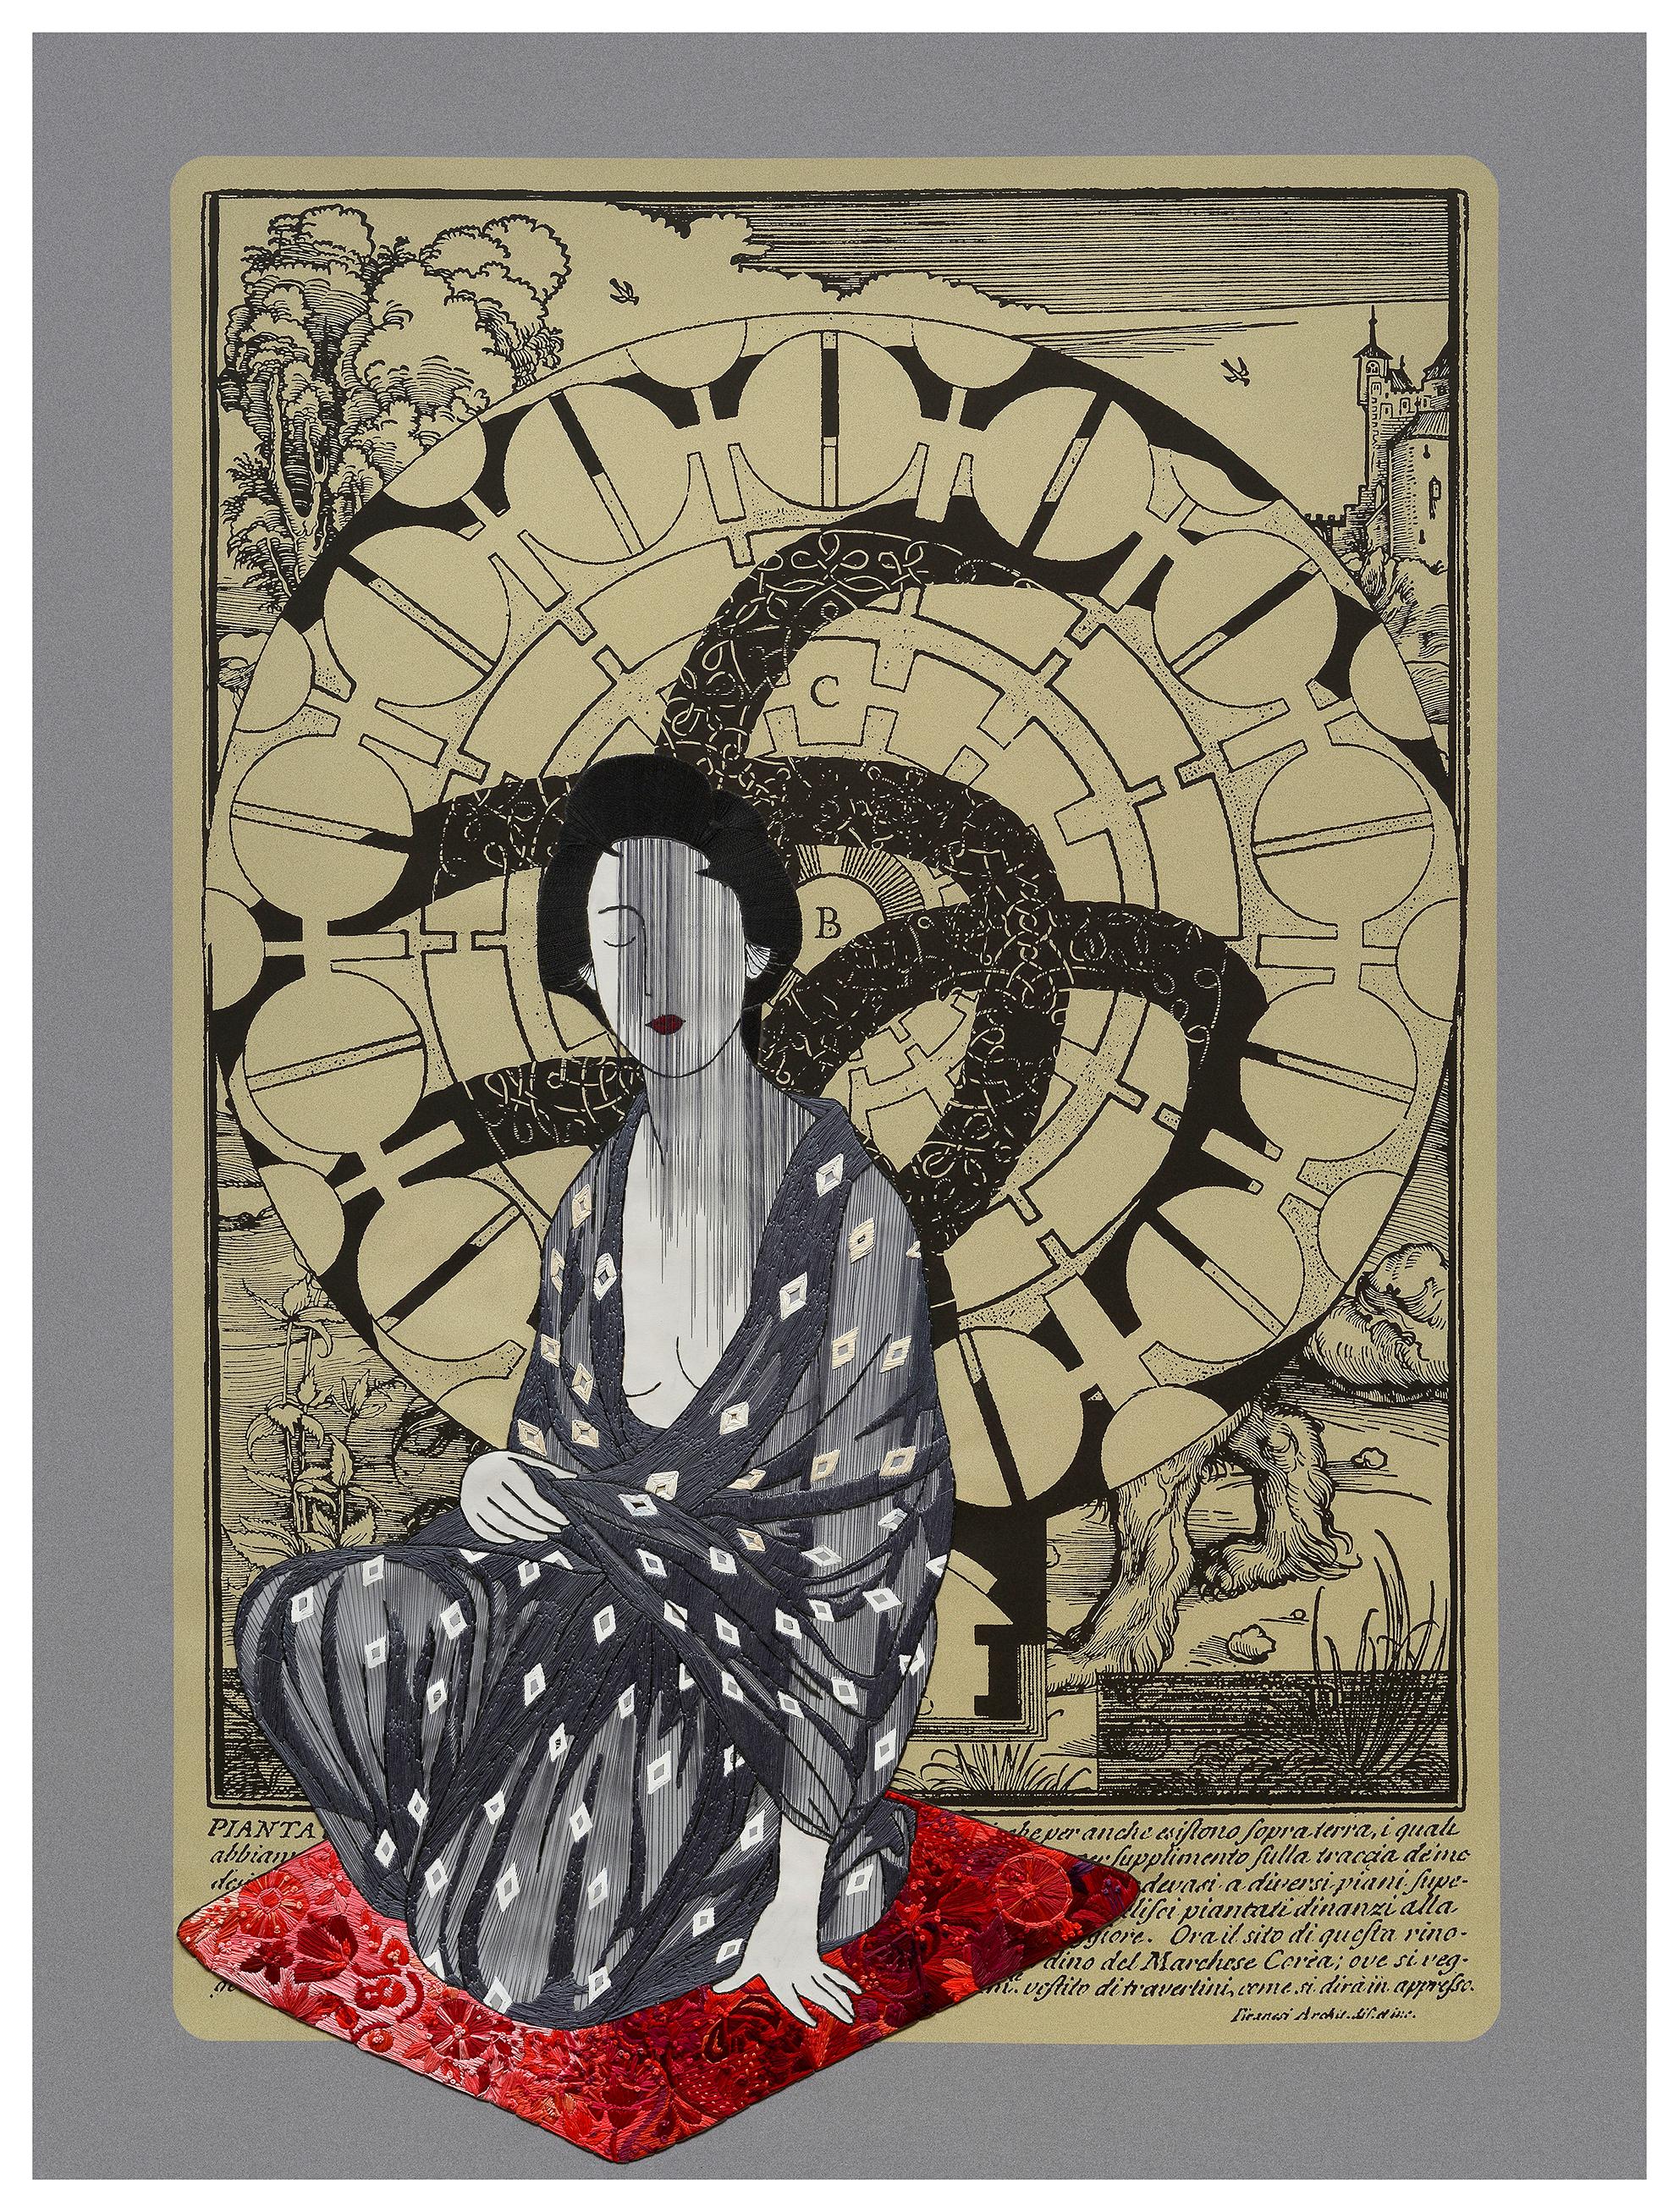 Geisha VI, Hand Embroidery on printed cloth. From Piranesi series